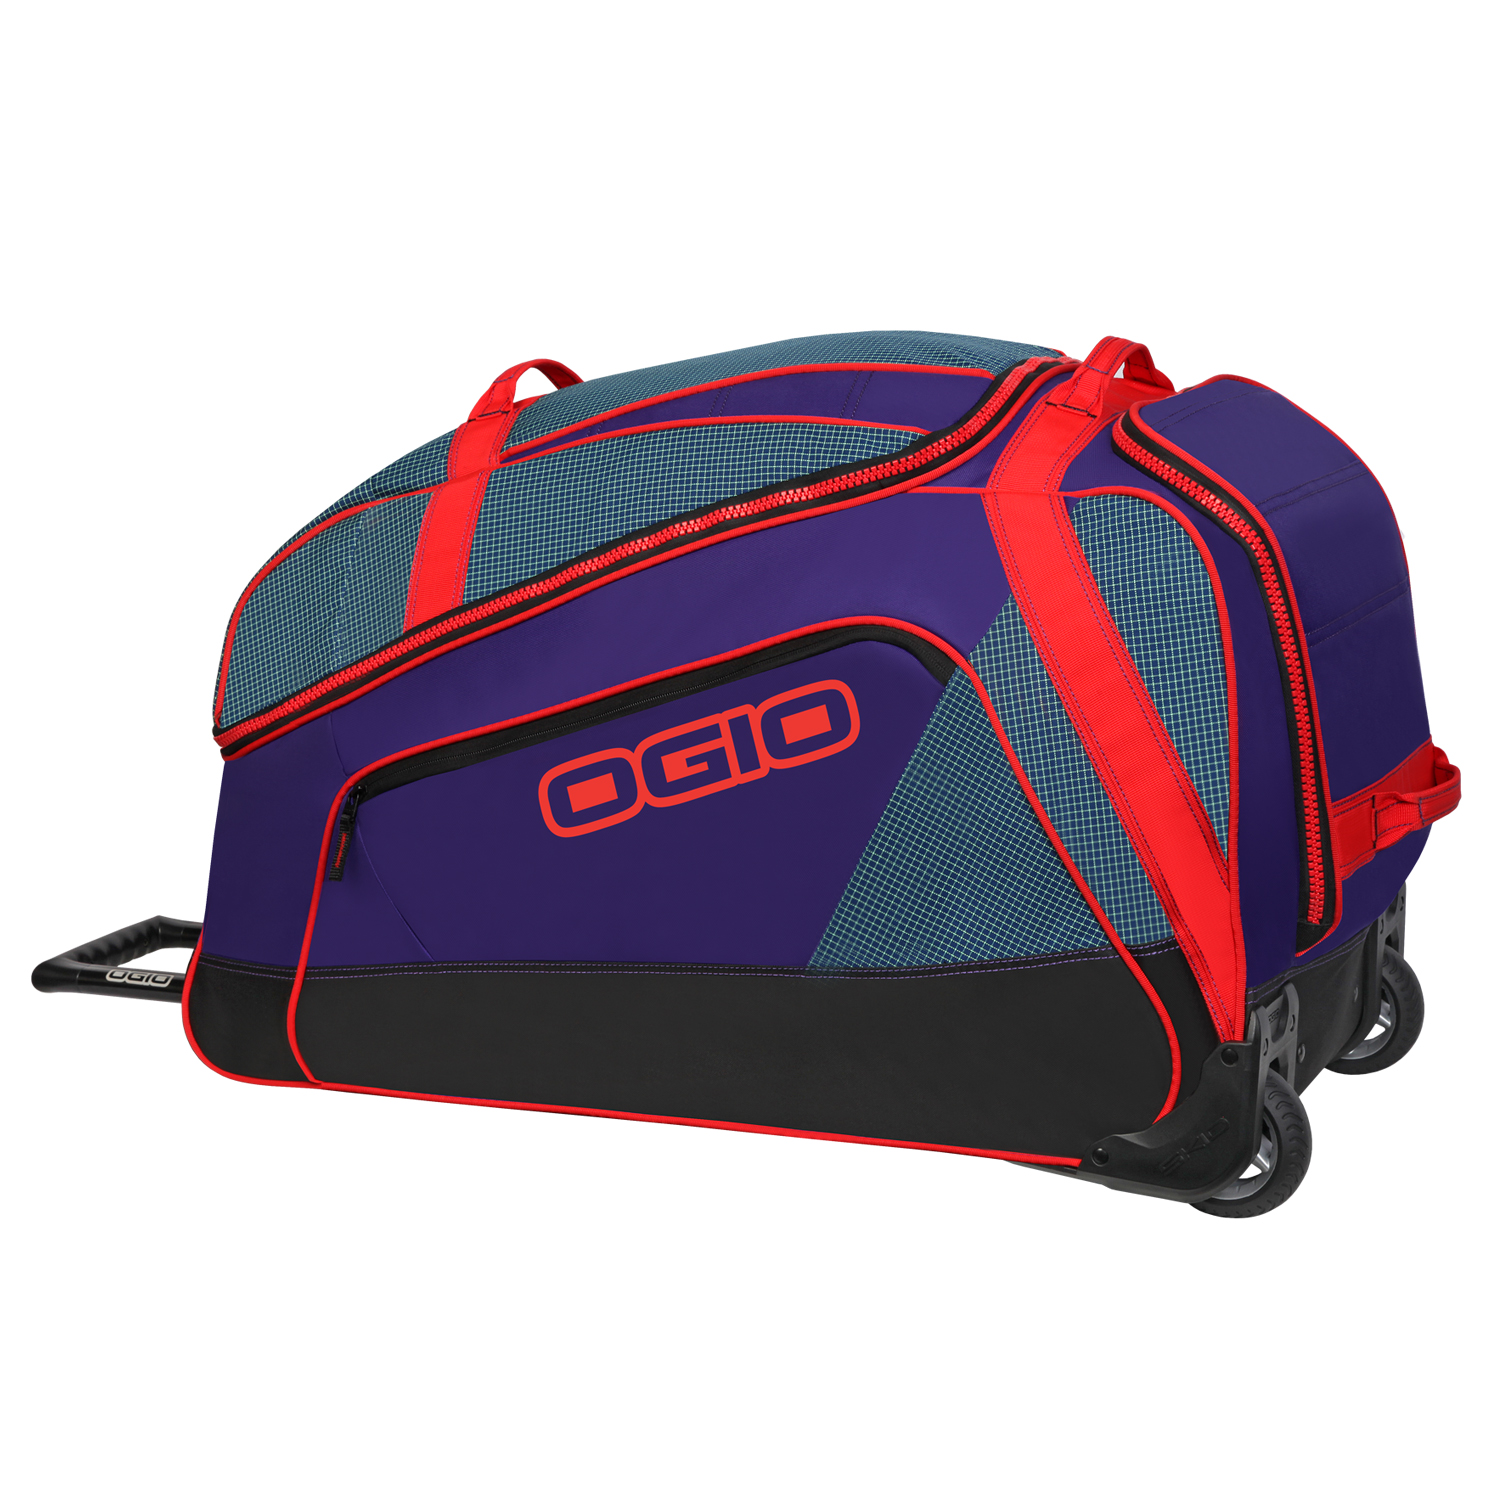 Ogio Travel Bag Big Mouth Wheel Bag Tealio, 140 Liter